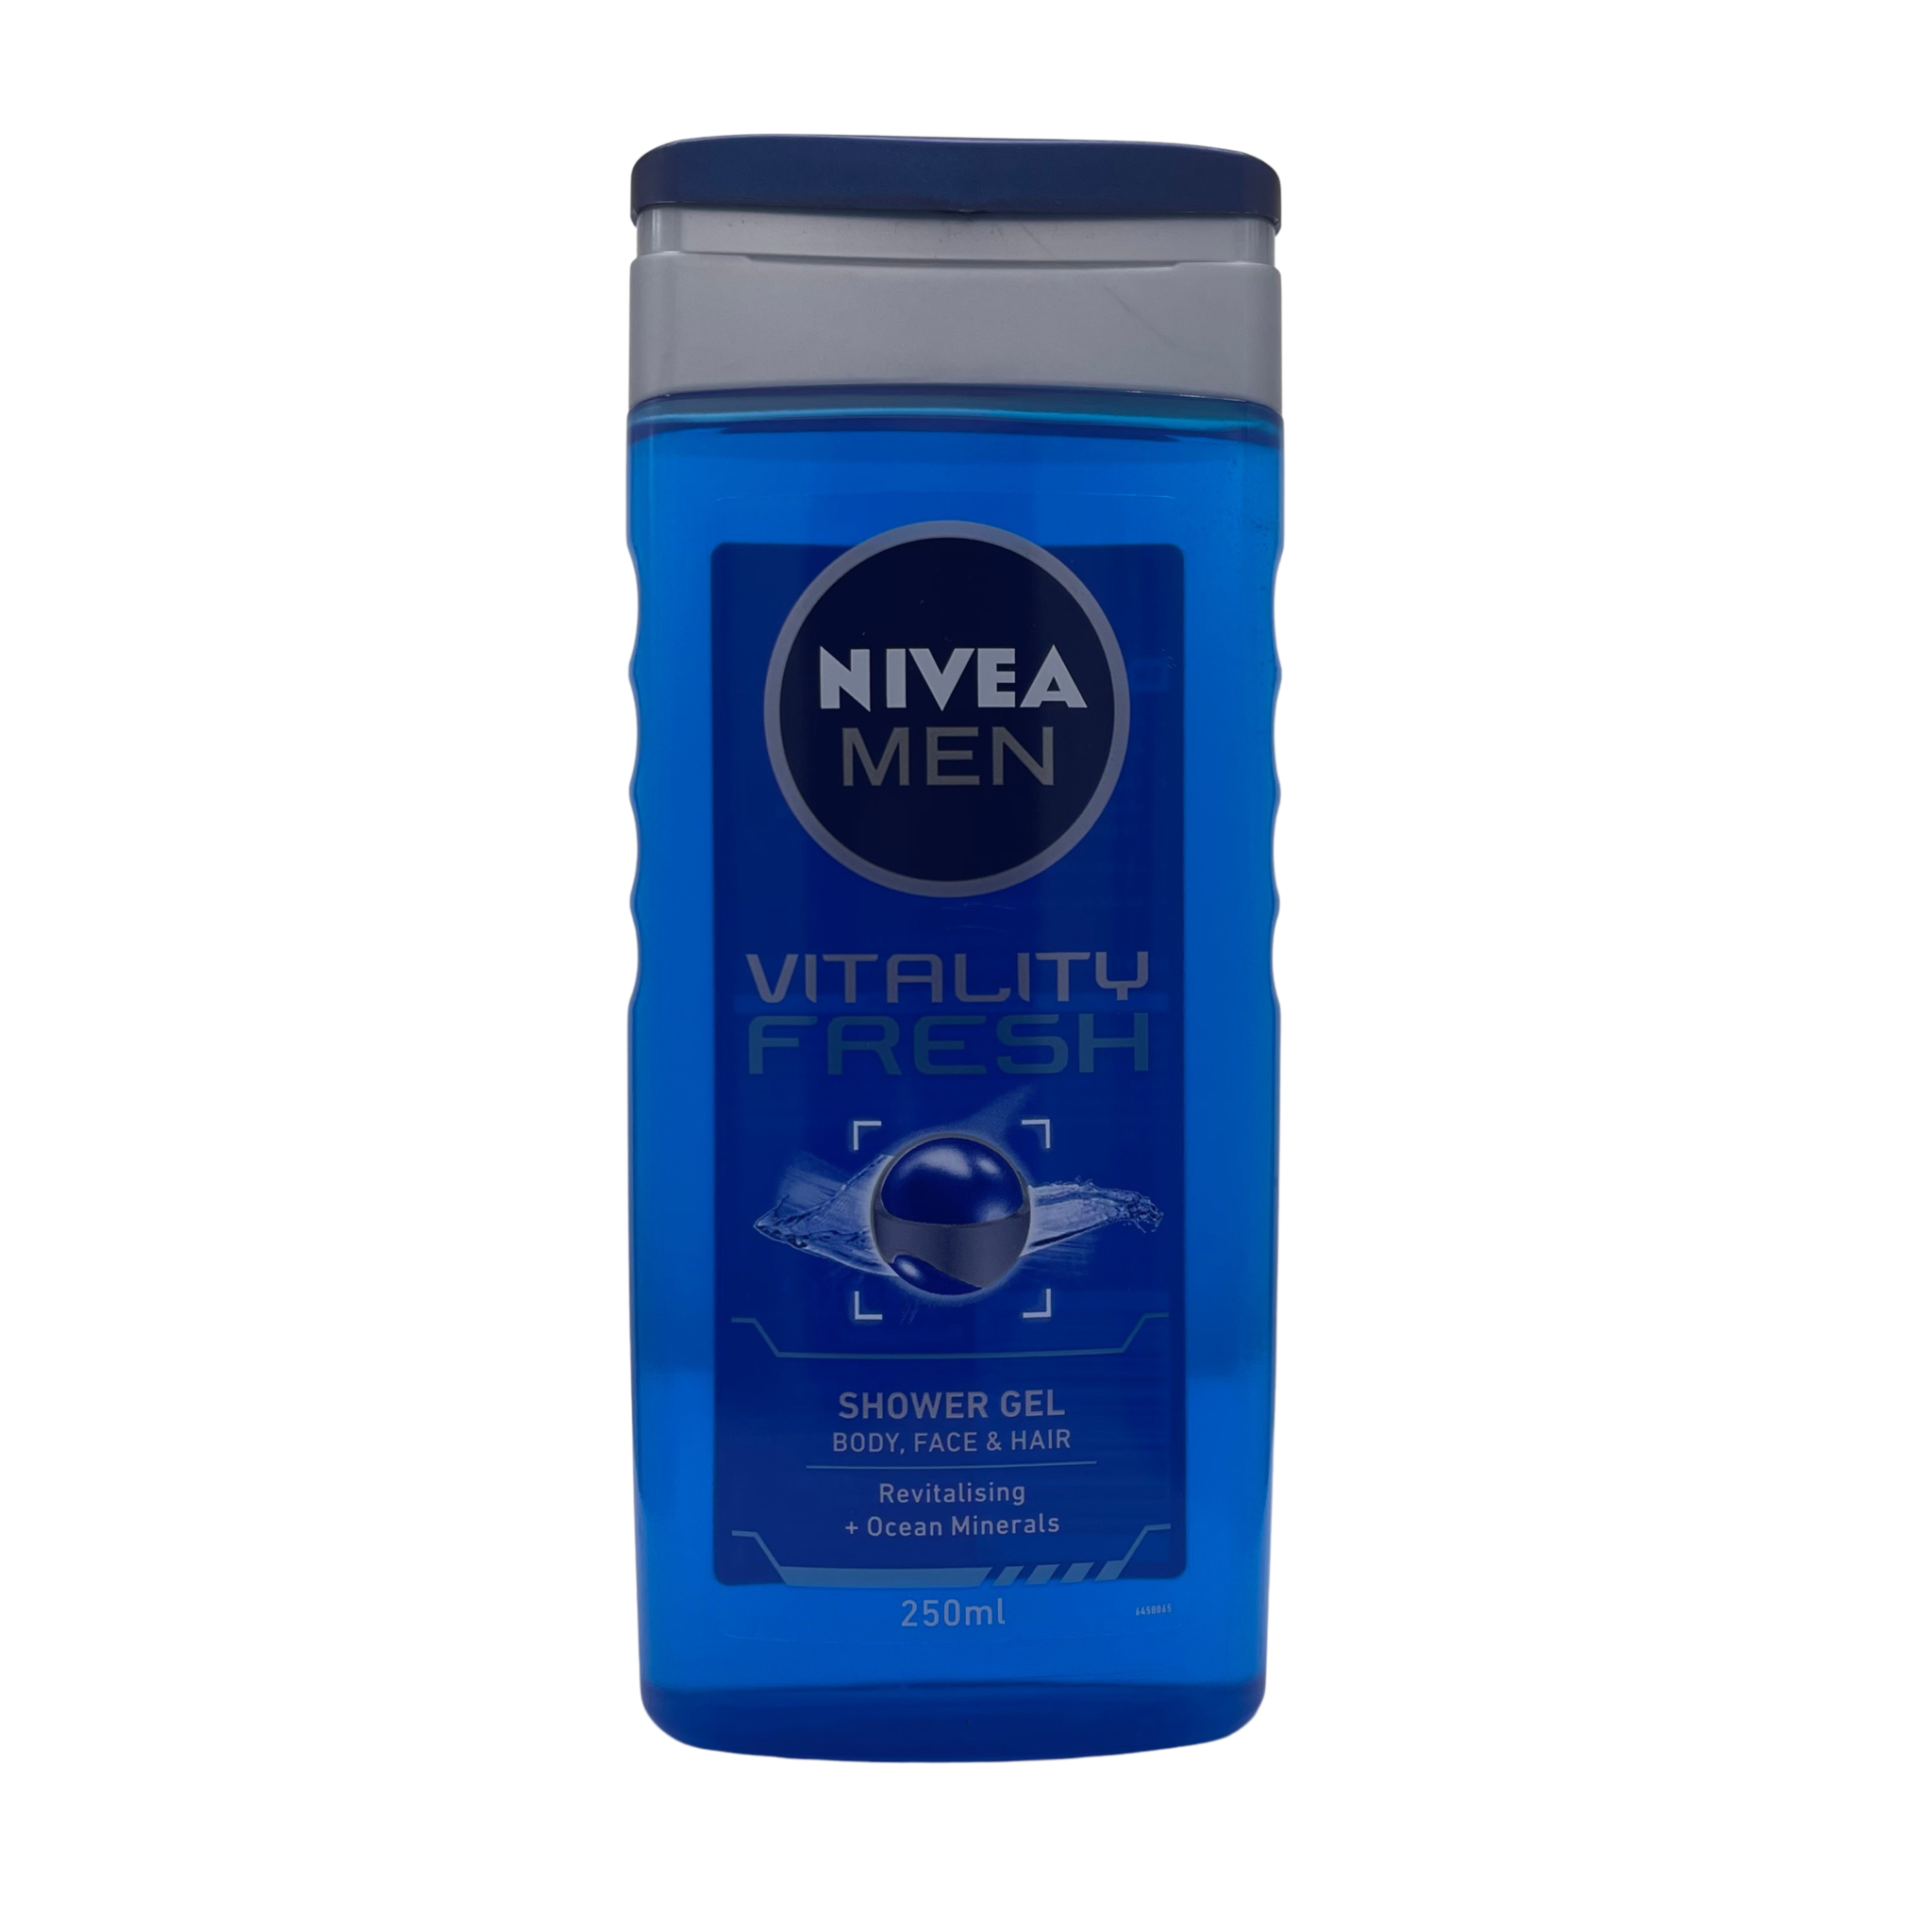 Nivea Men Vitality Fresh showergel 250ml